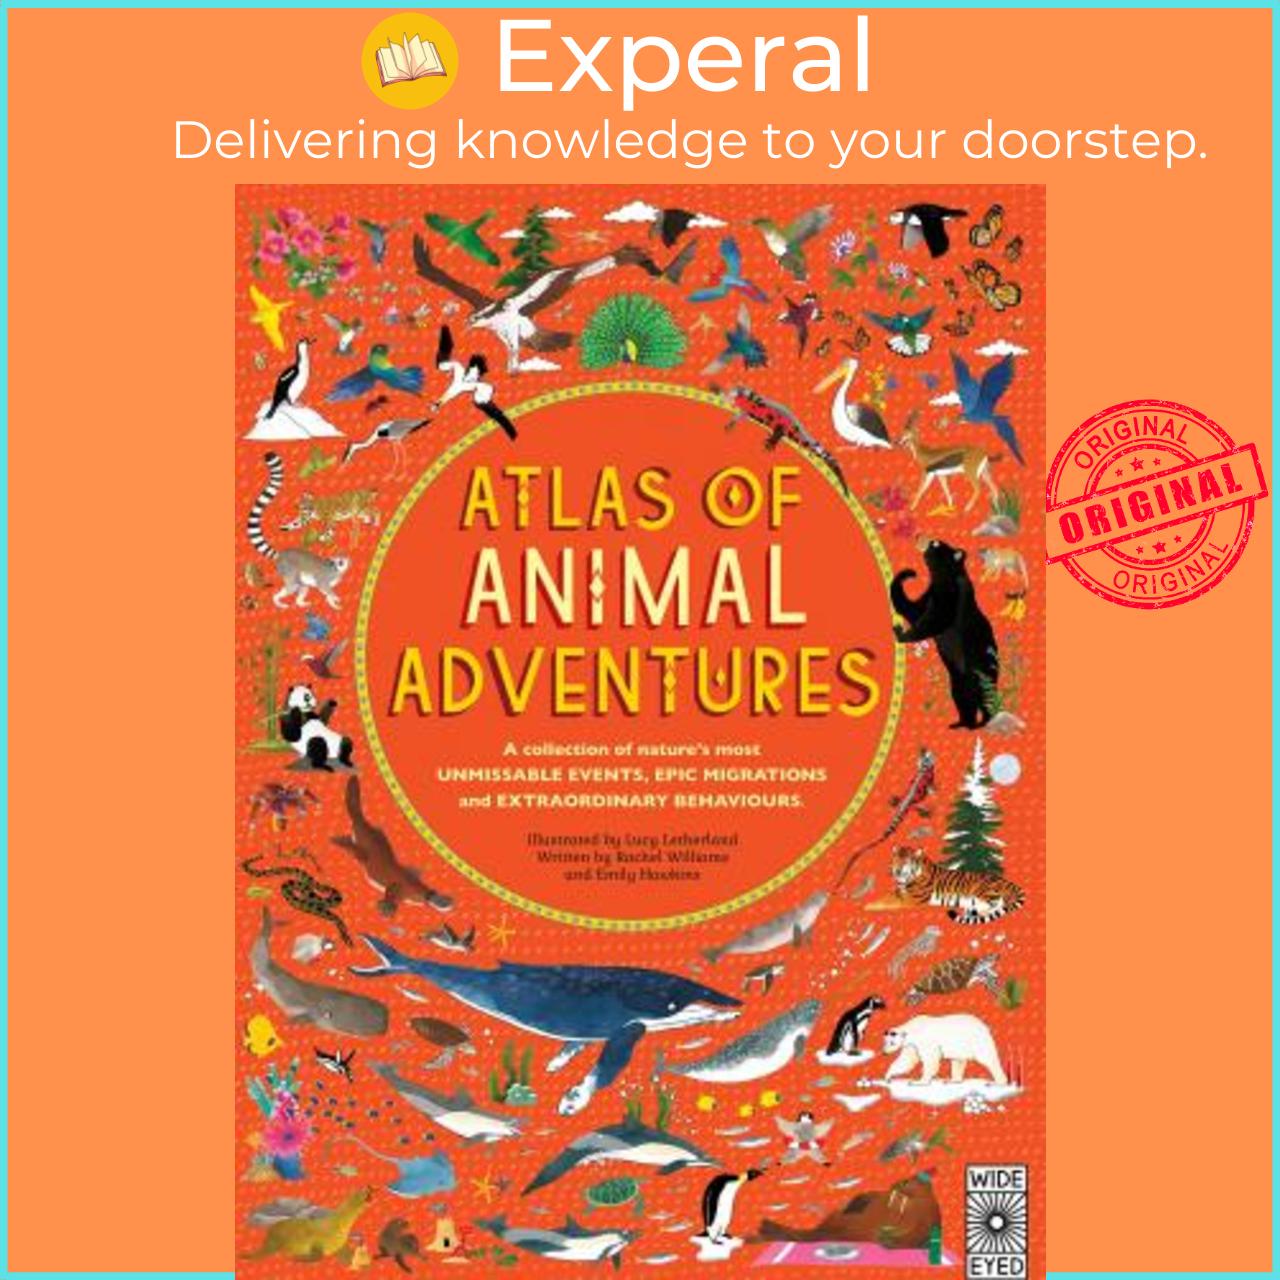 Sách - Atlas of Animal Adventures by Rachel Williams (UK edition, hardcover)